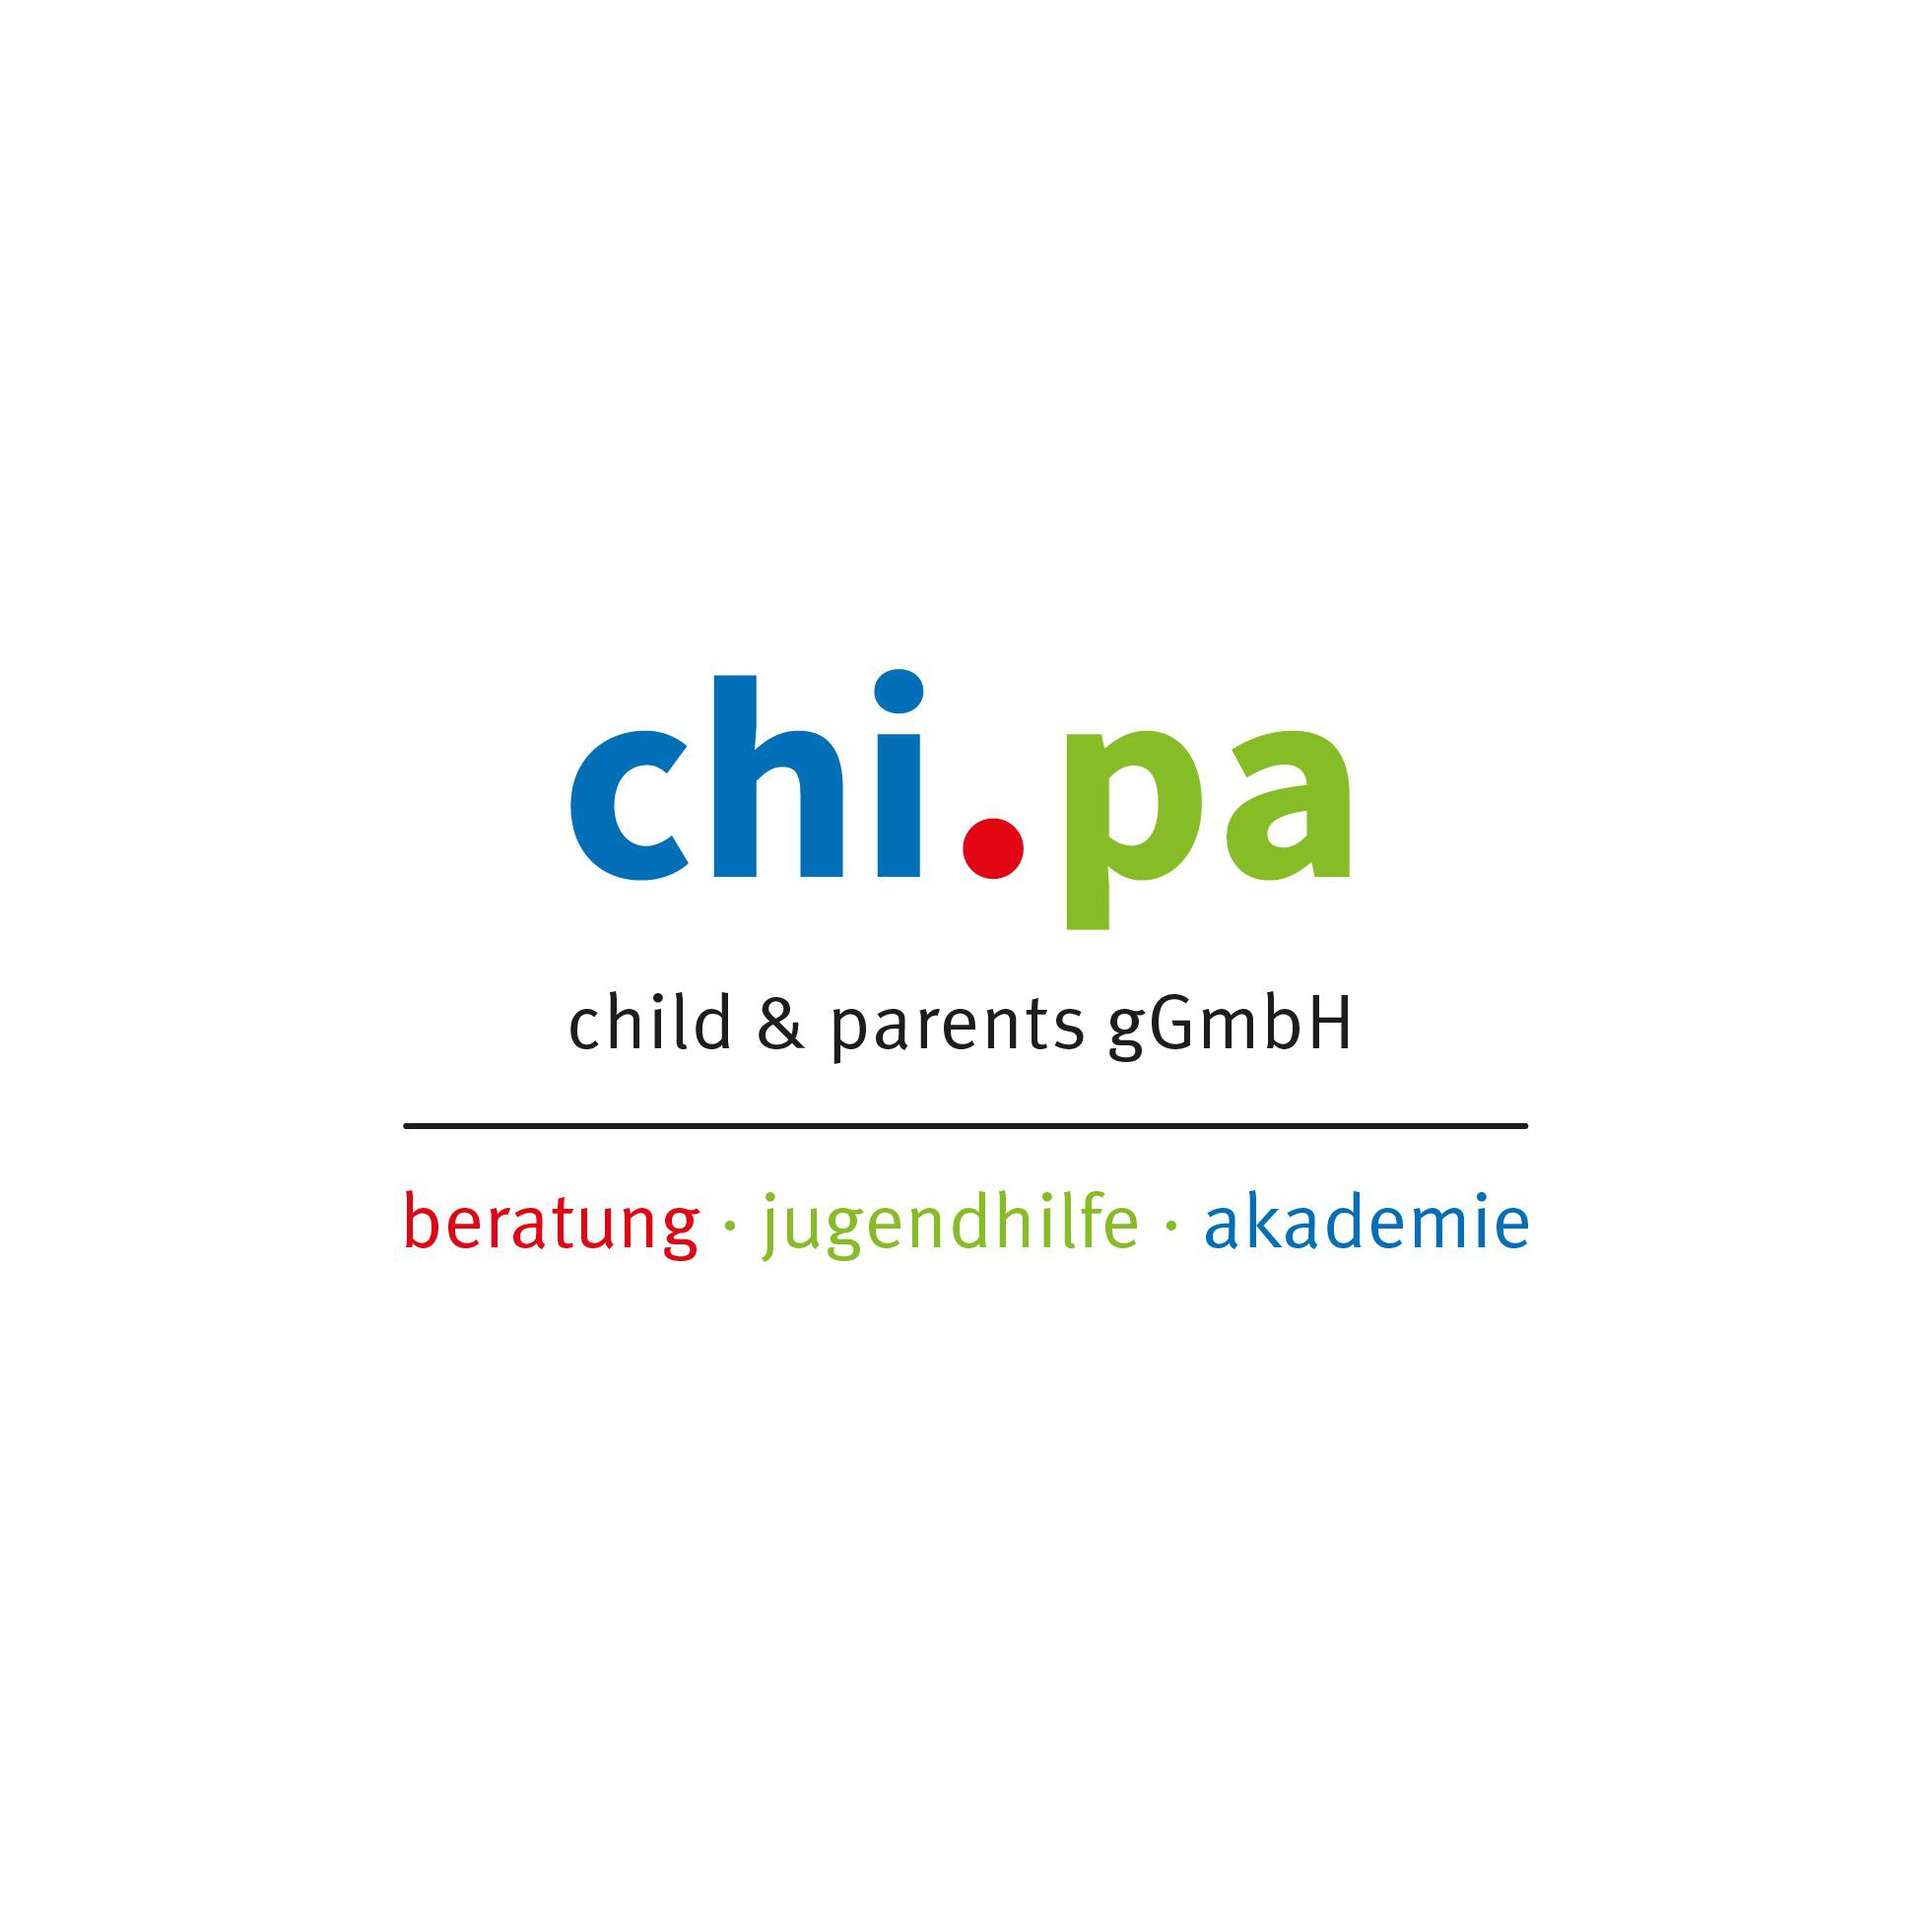 chi.pa | child & parents gGmbH  